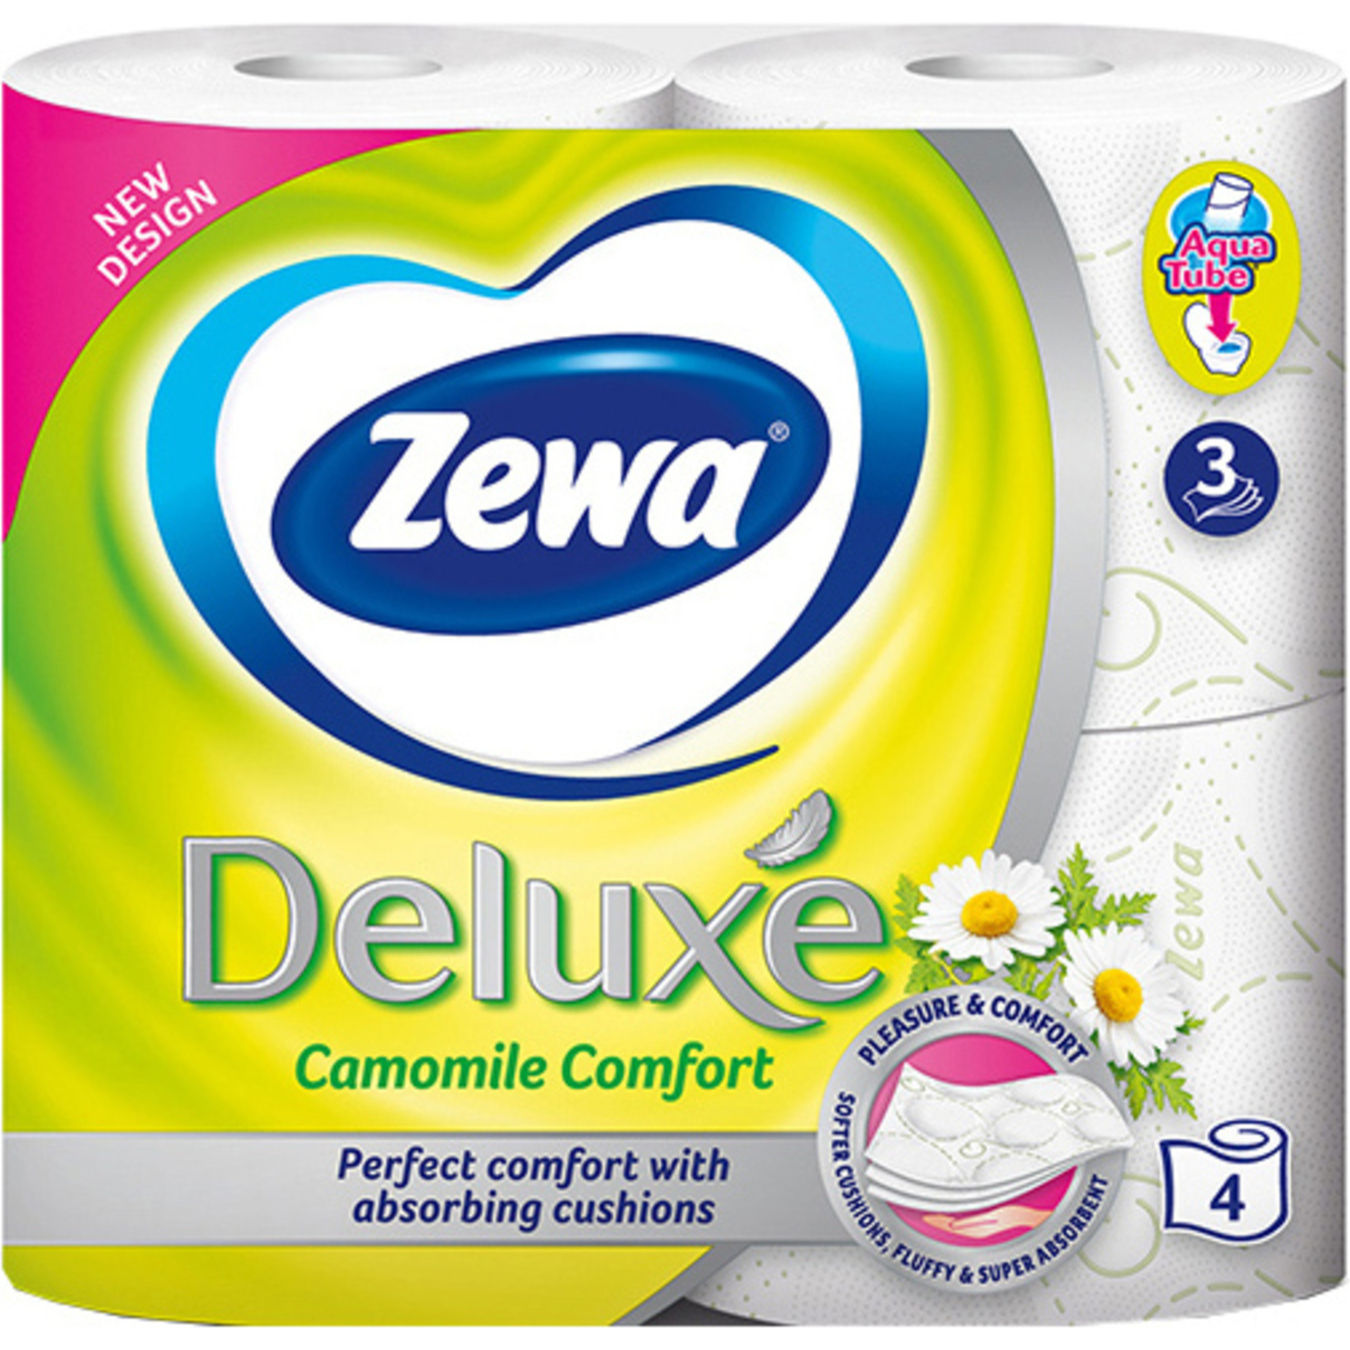 Zewa Deluxe Camomile Comfort 3-ply white toilet paper 4pcs